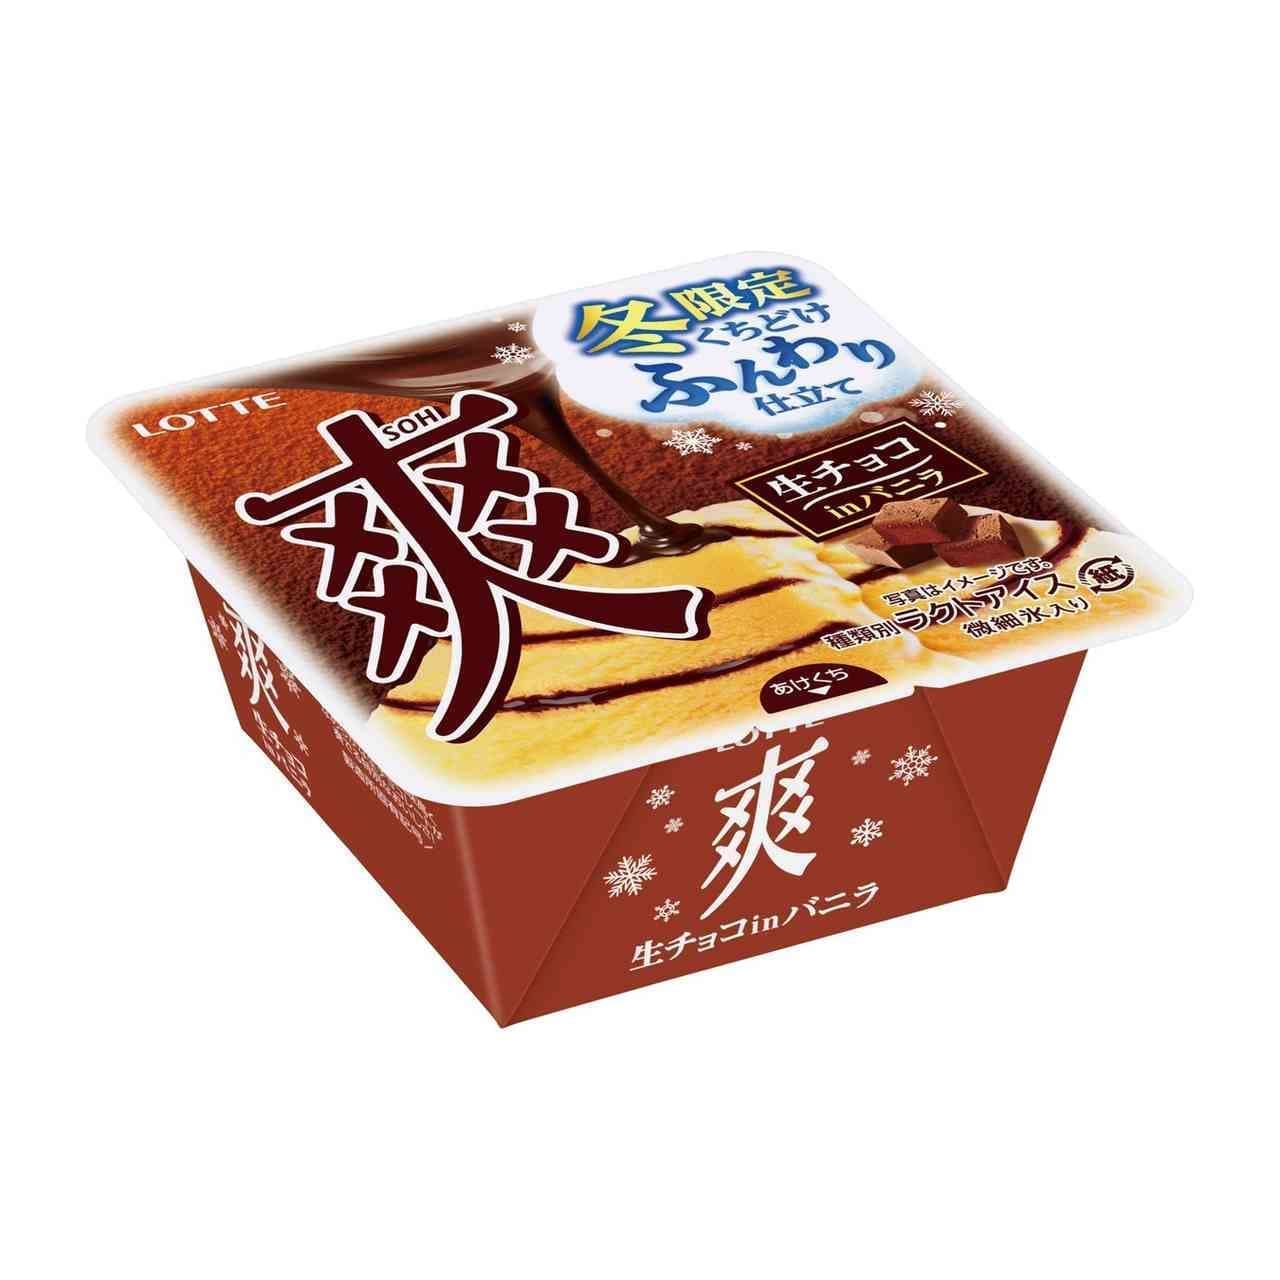 Lotte "Sou: Fresh Chocolate in Vanilla